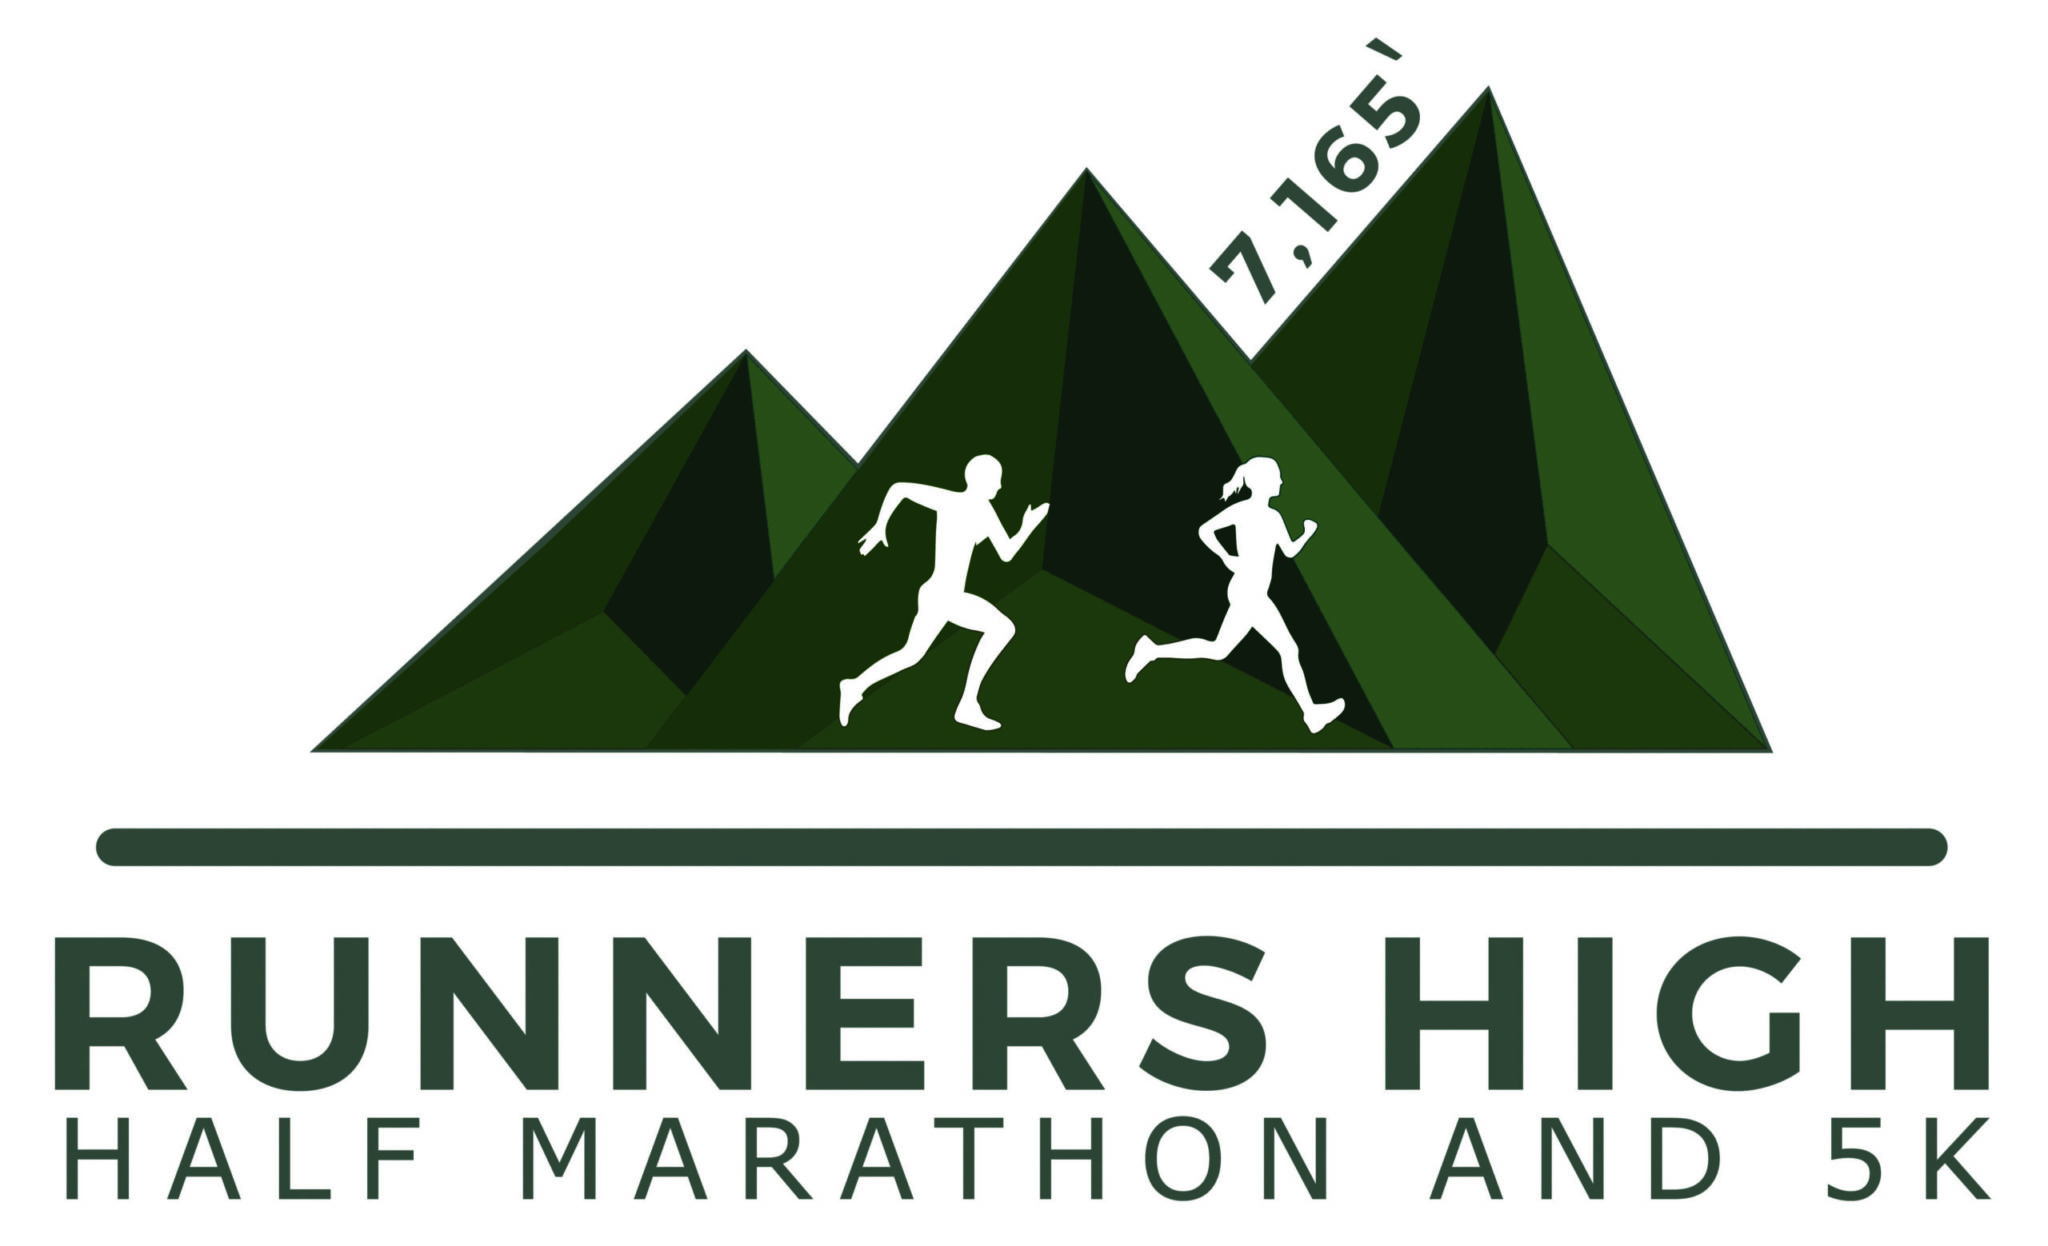 Runners High Half Marathon and 5K logo on RaceRaves